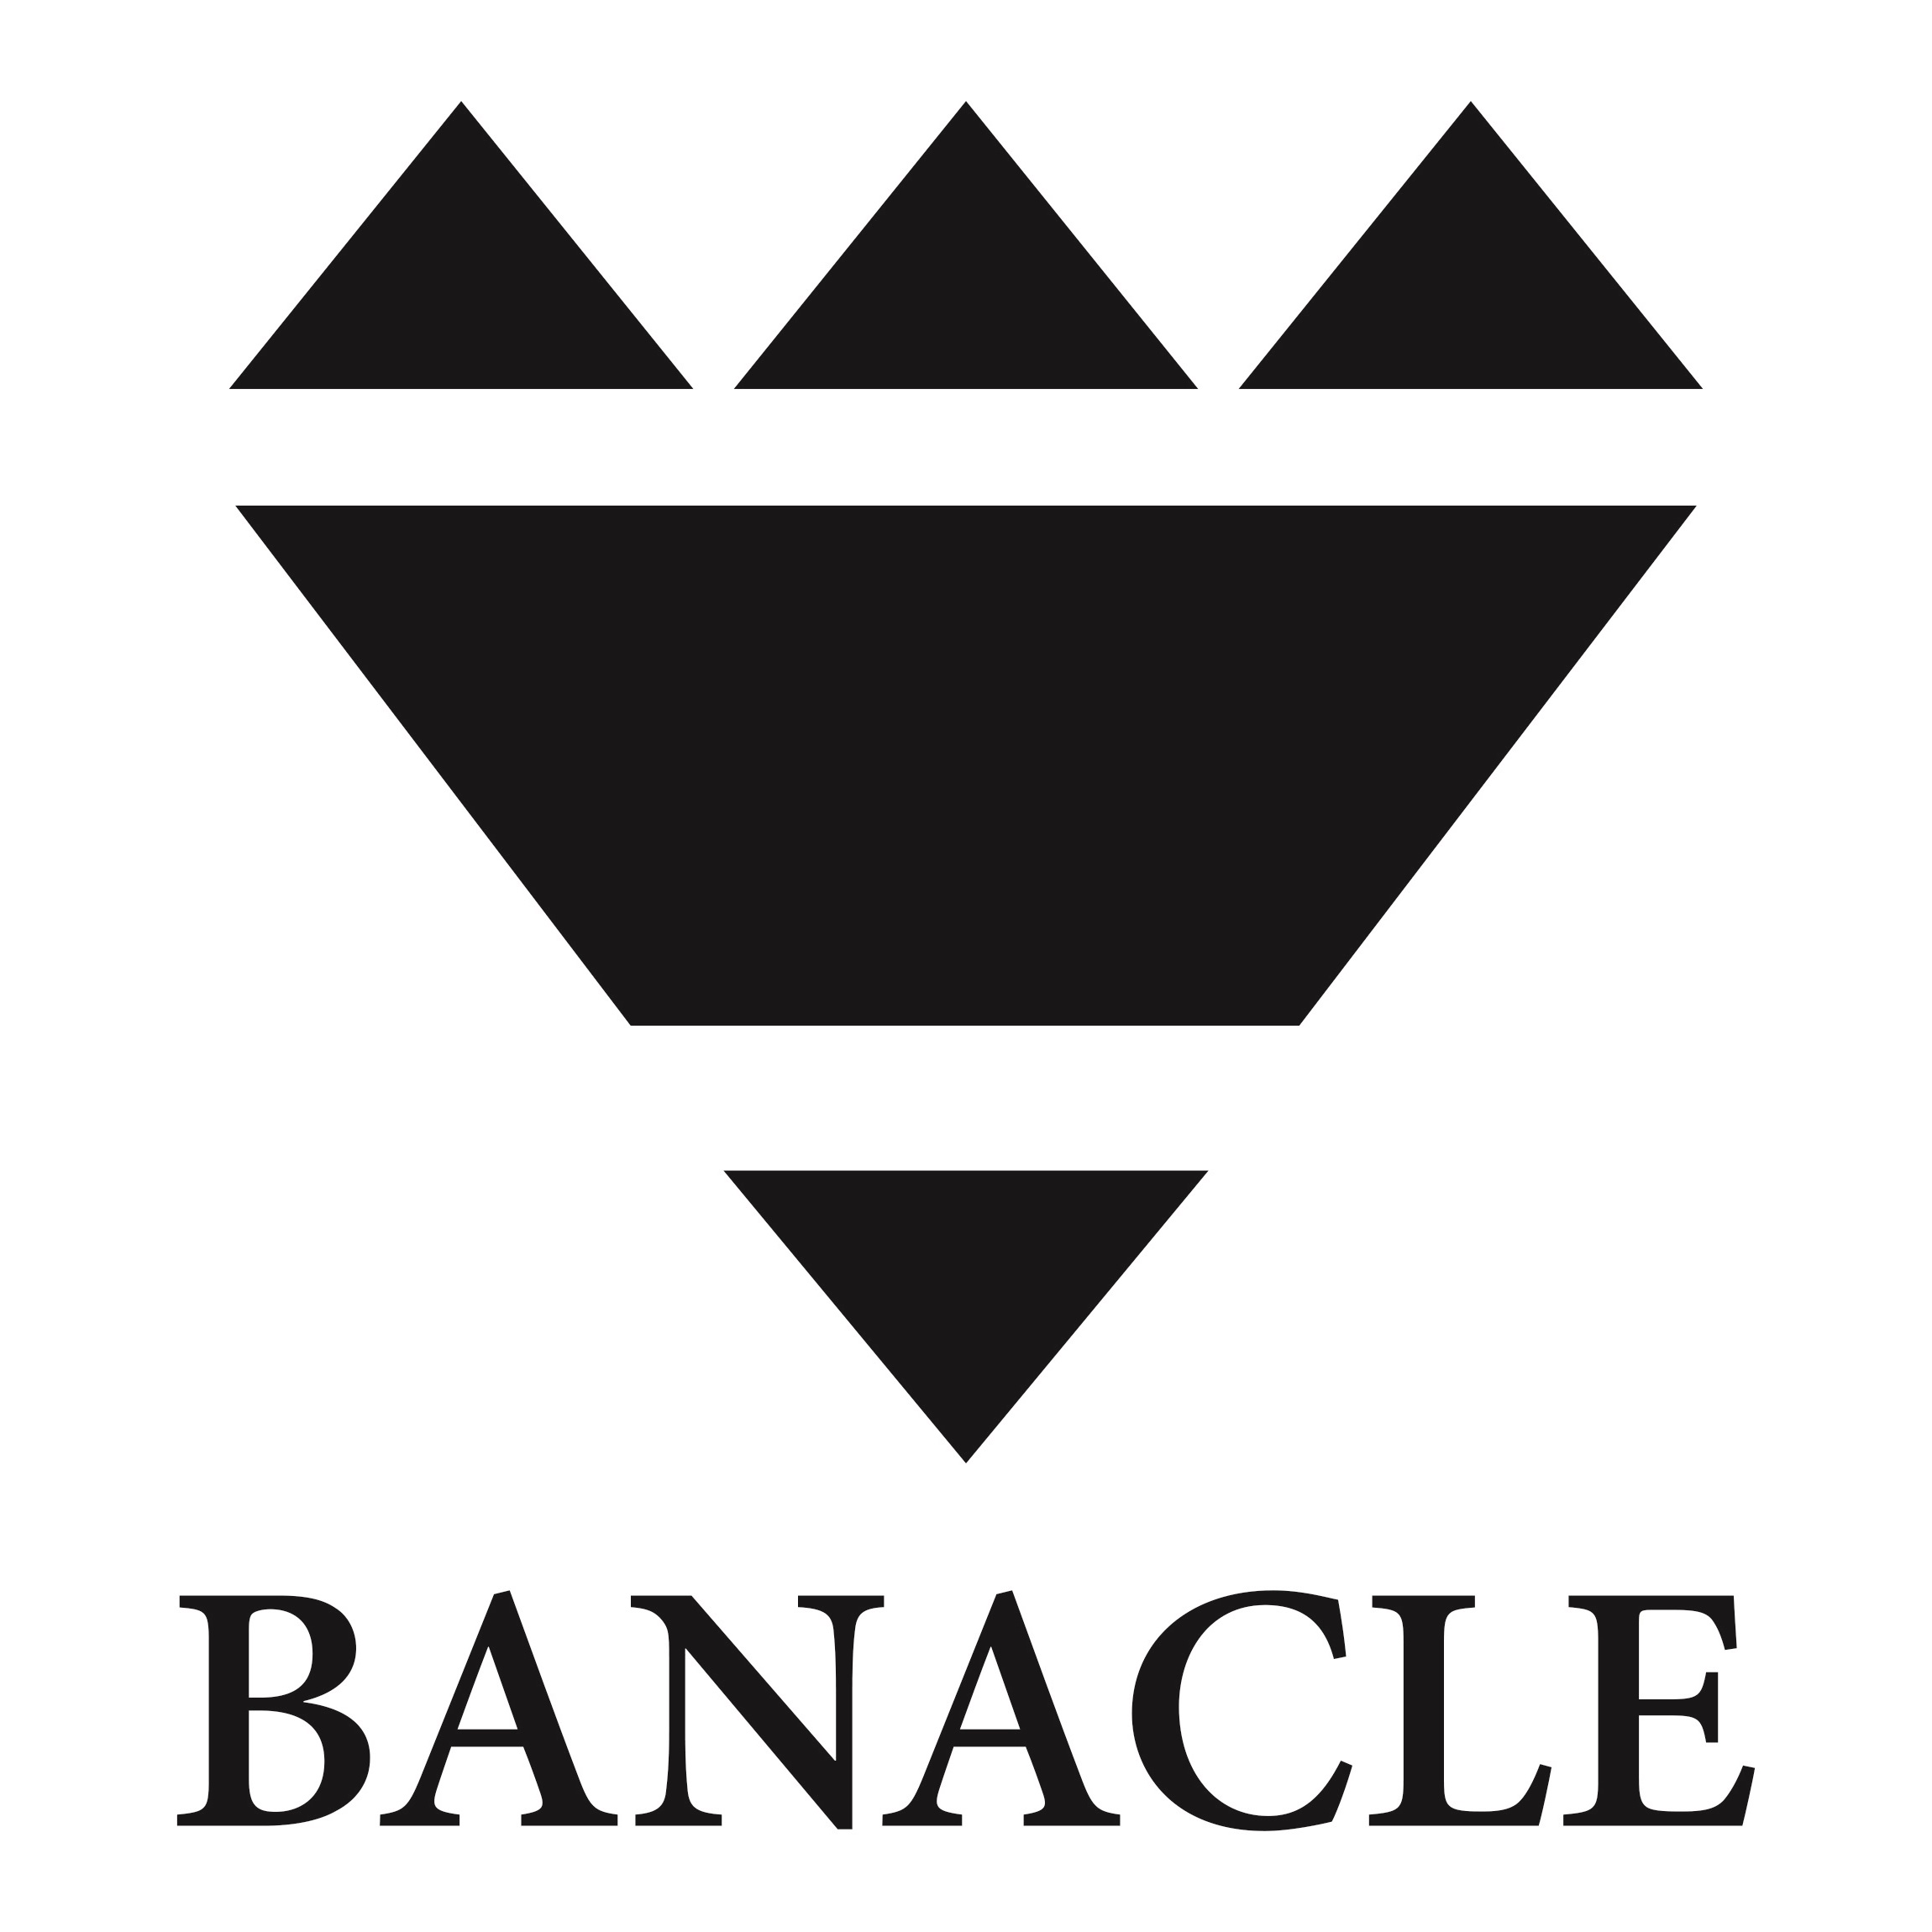 banacle logo image